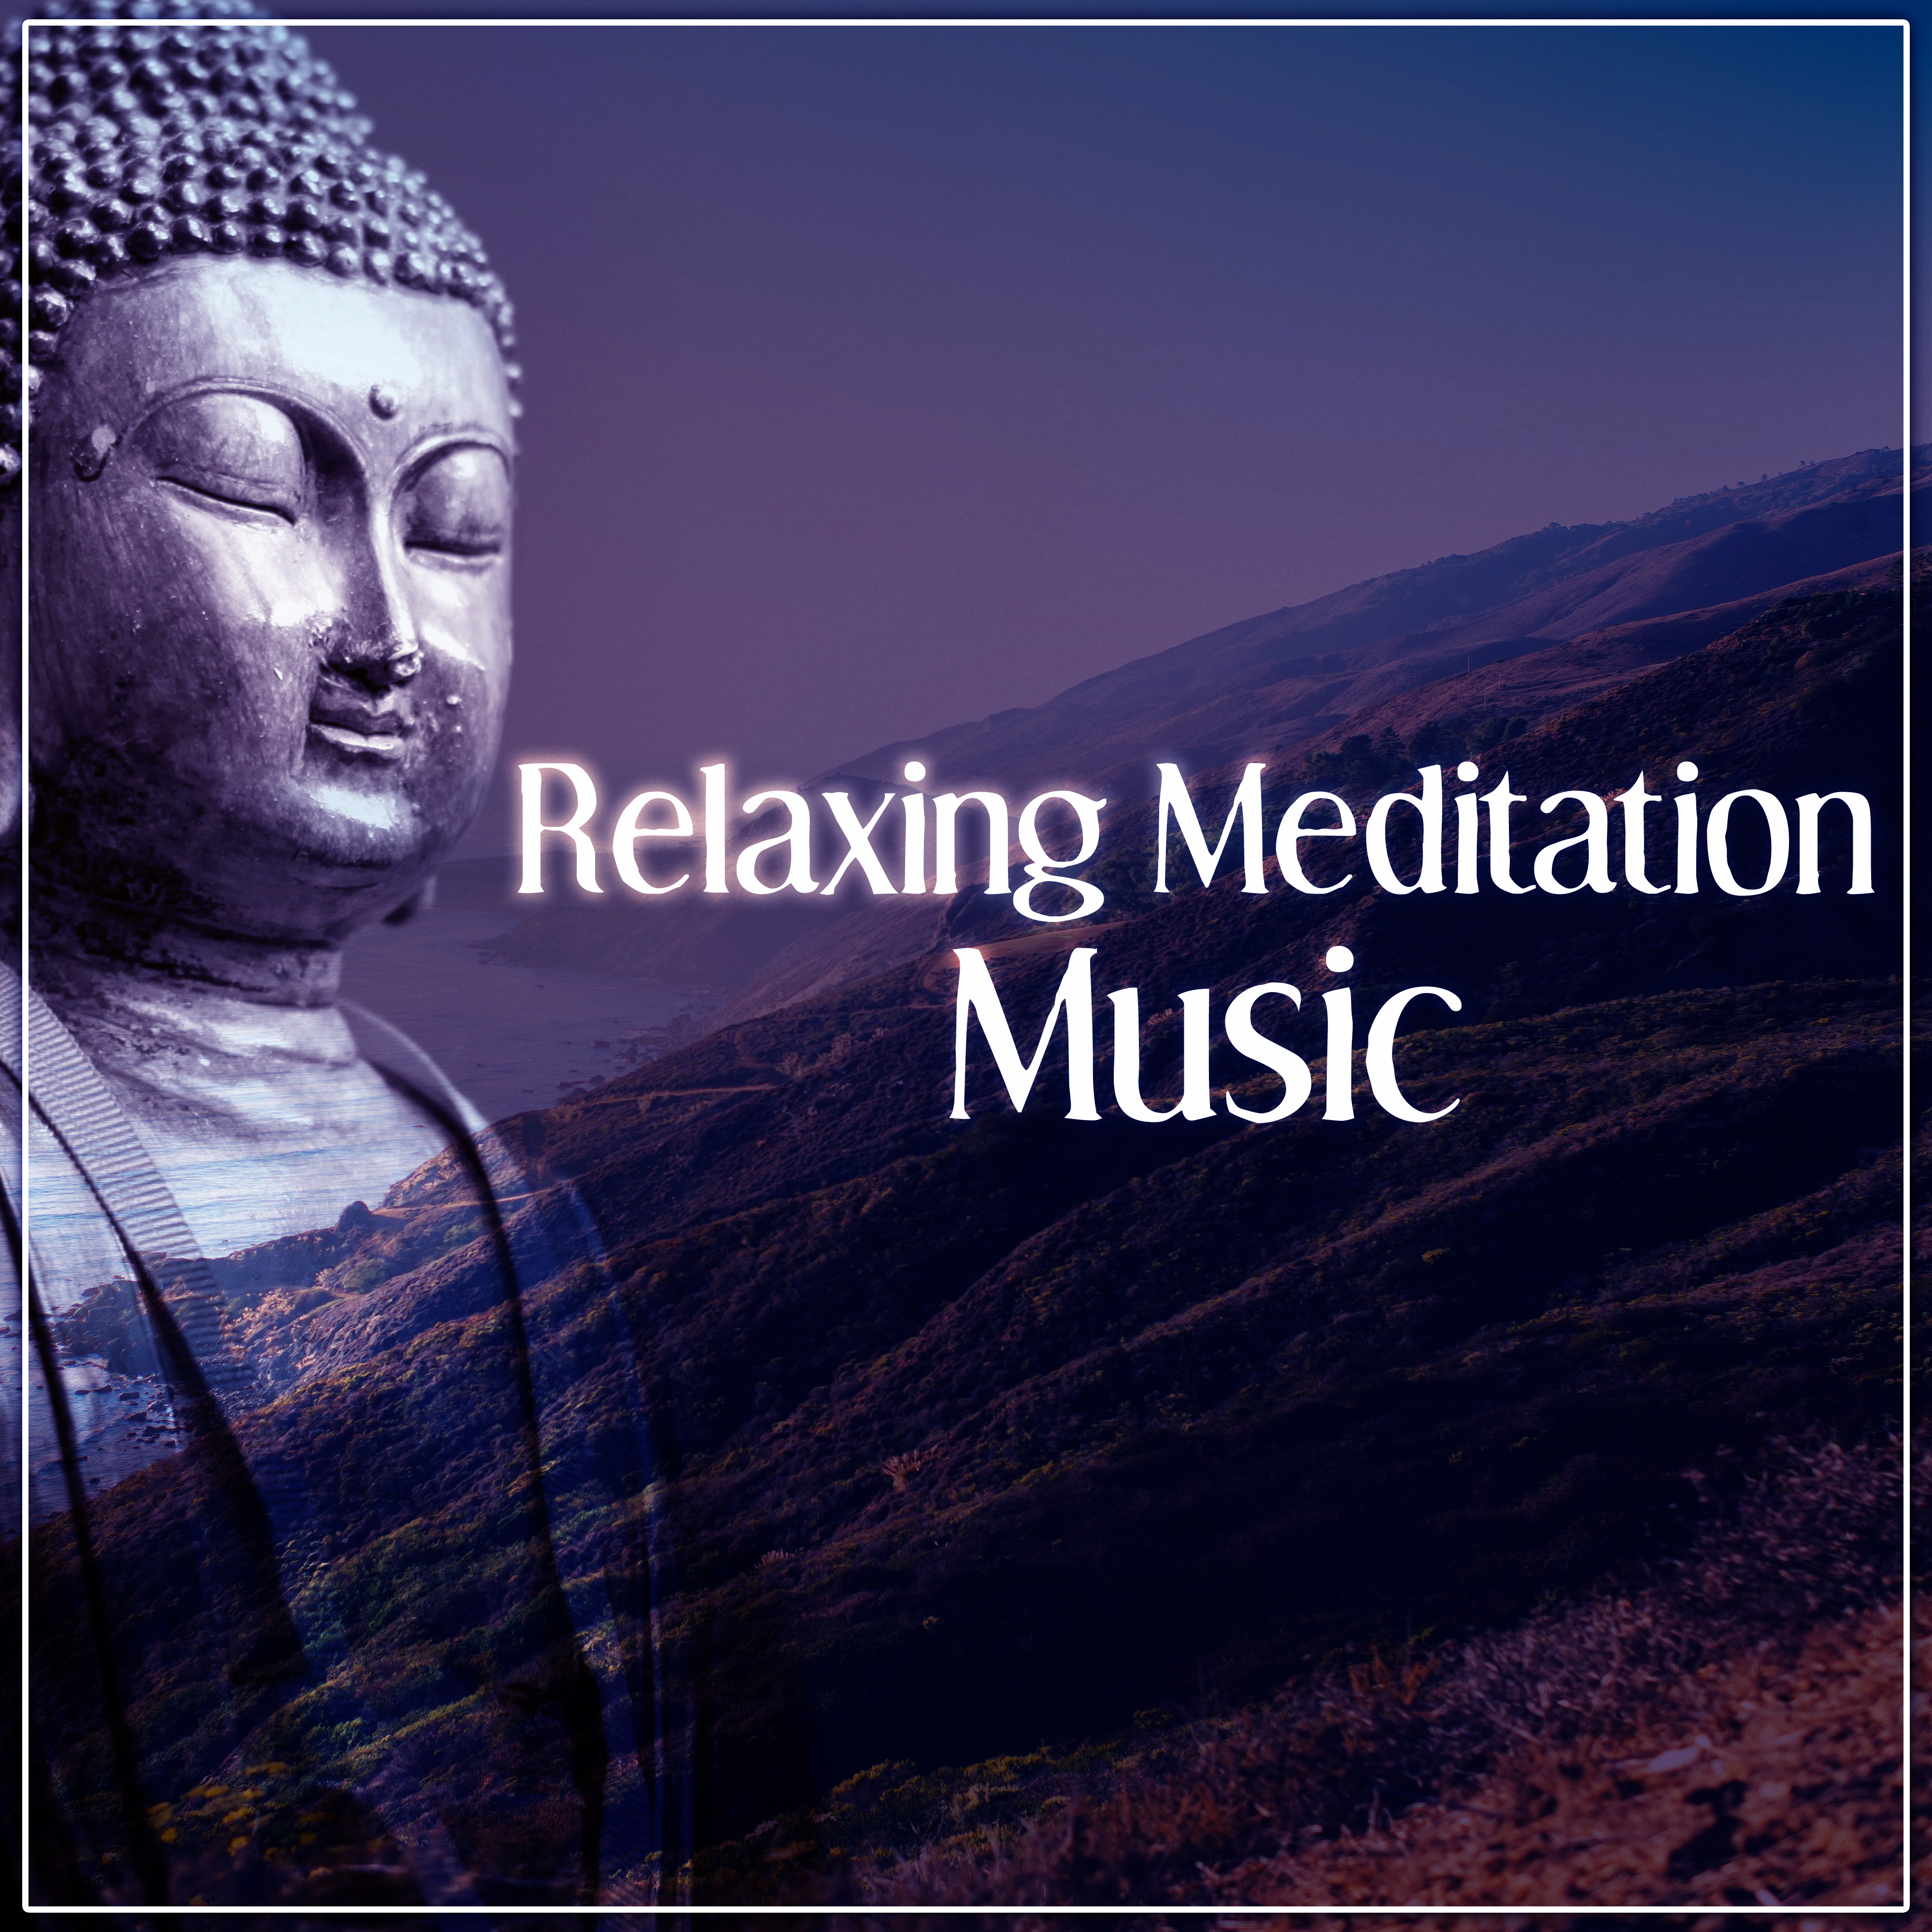 Relaxing Meditation Music  Healing Relaxation Ambient, Namaste Zen Music, Ambient Music for Relaxation, Brainwaves, Yoga Music